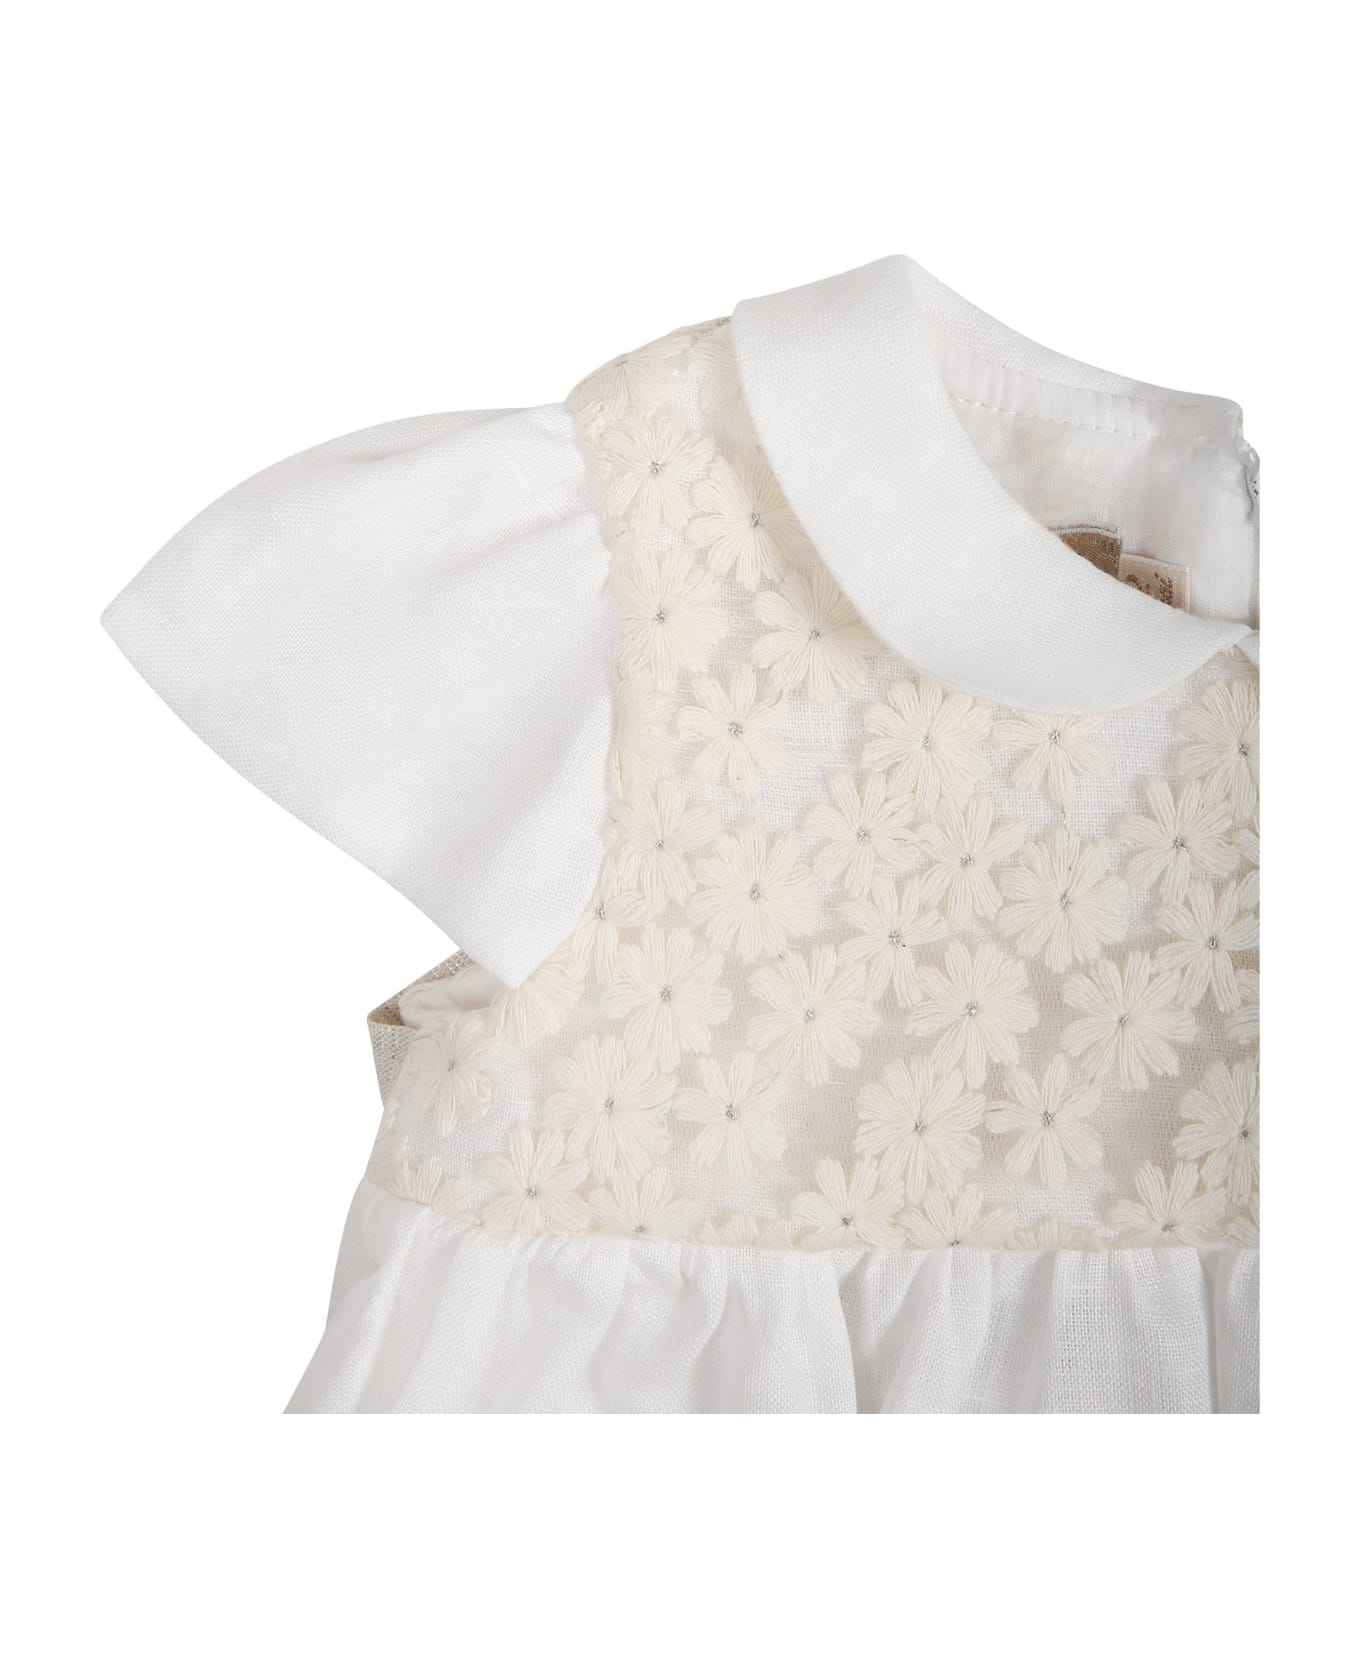 La stupenderia White Dress For Baby Girl With Little Flowers - White